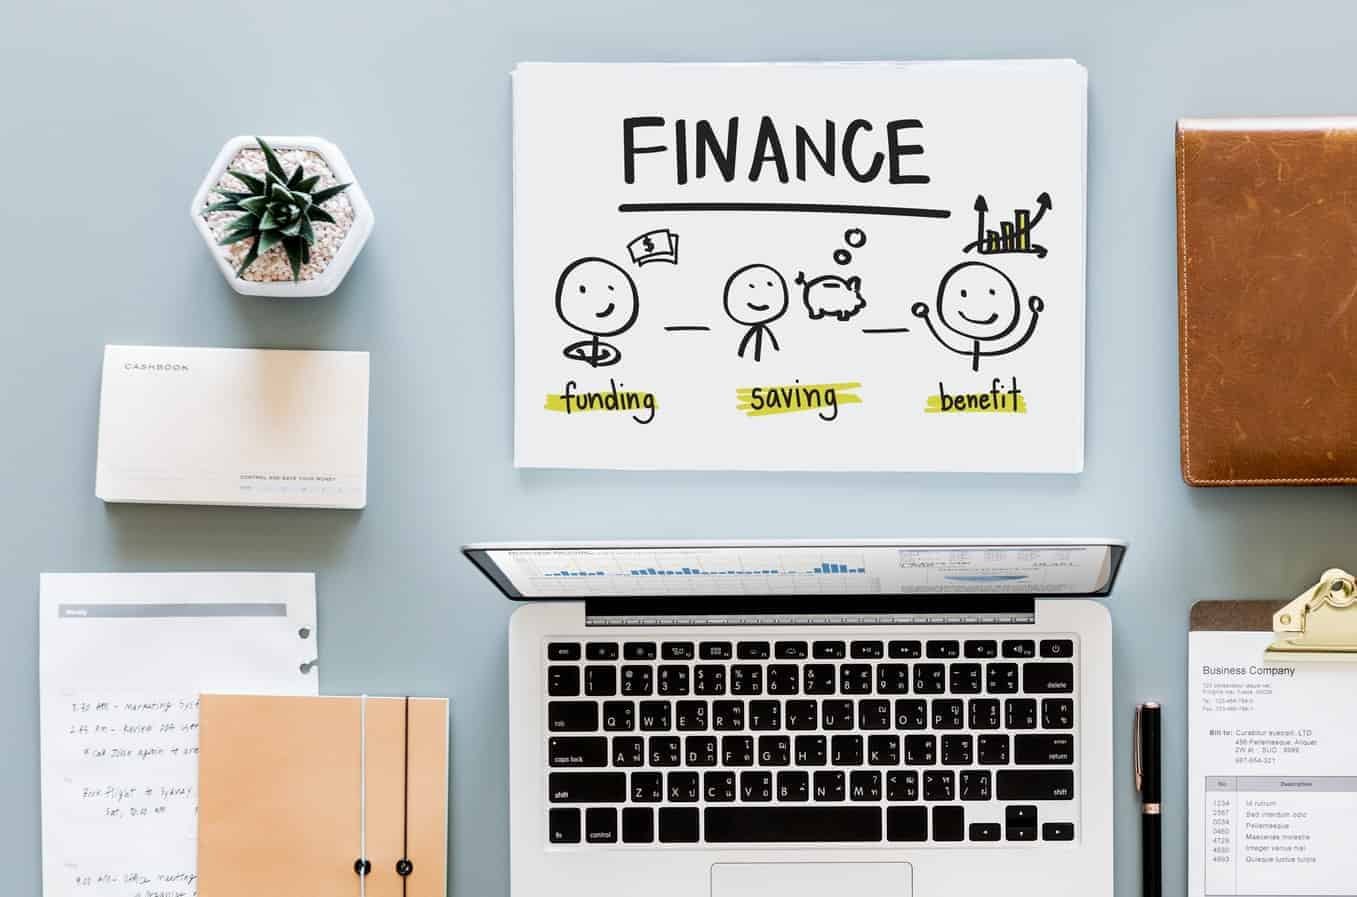 financing loans for startups